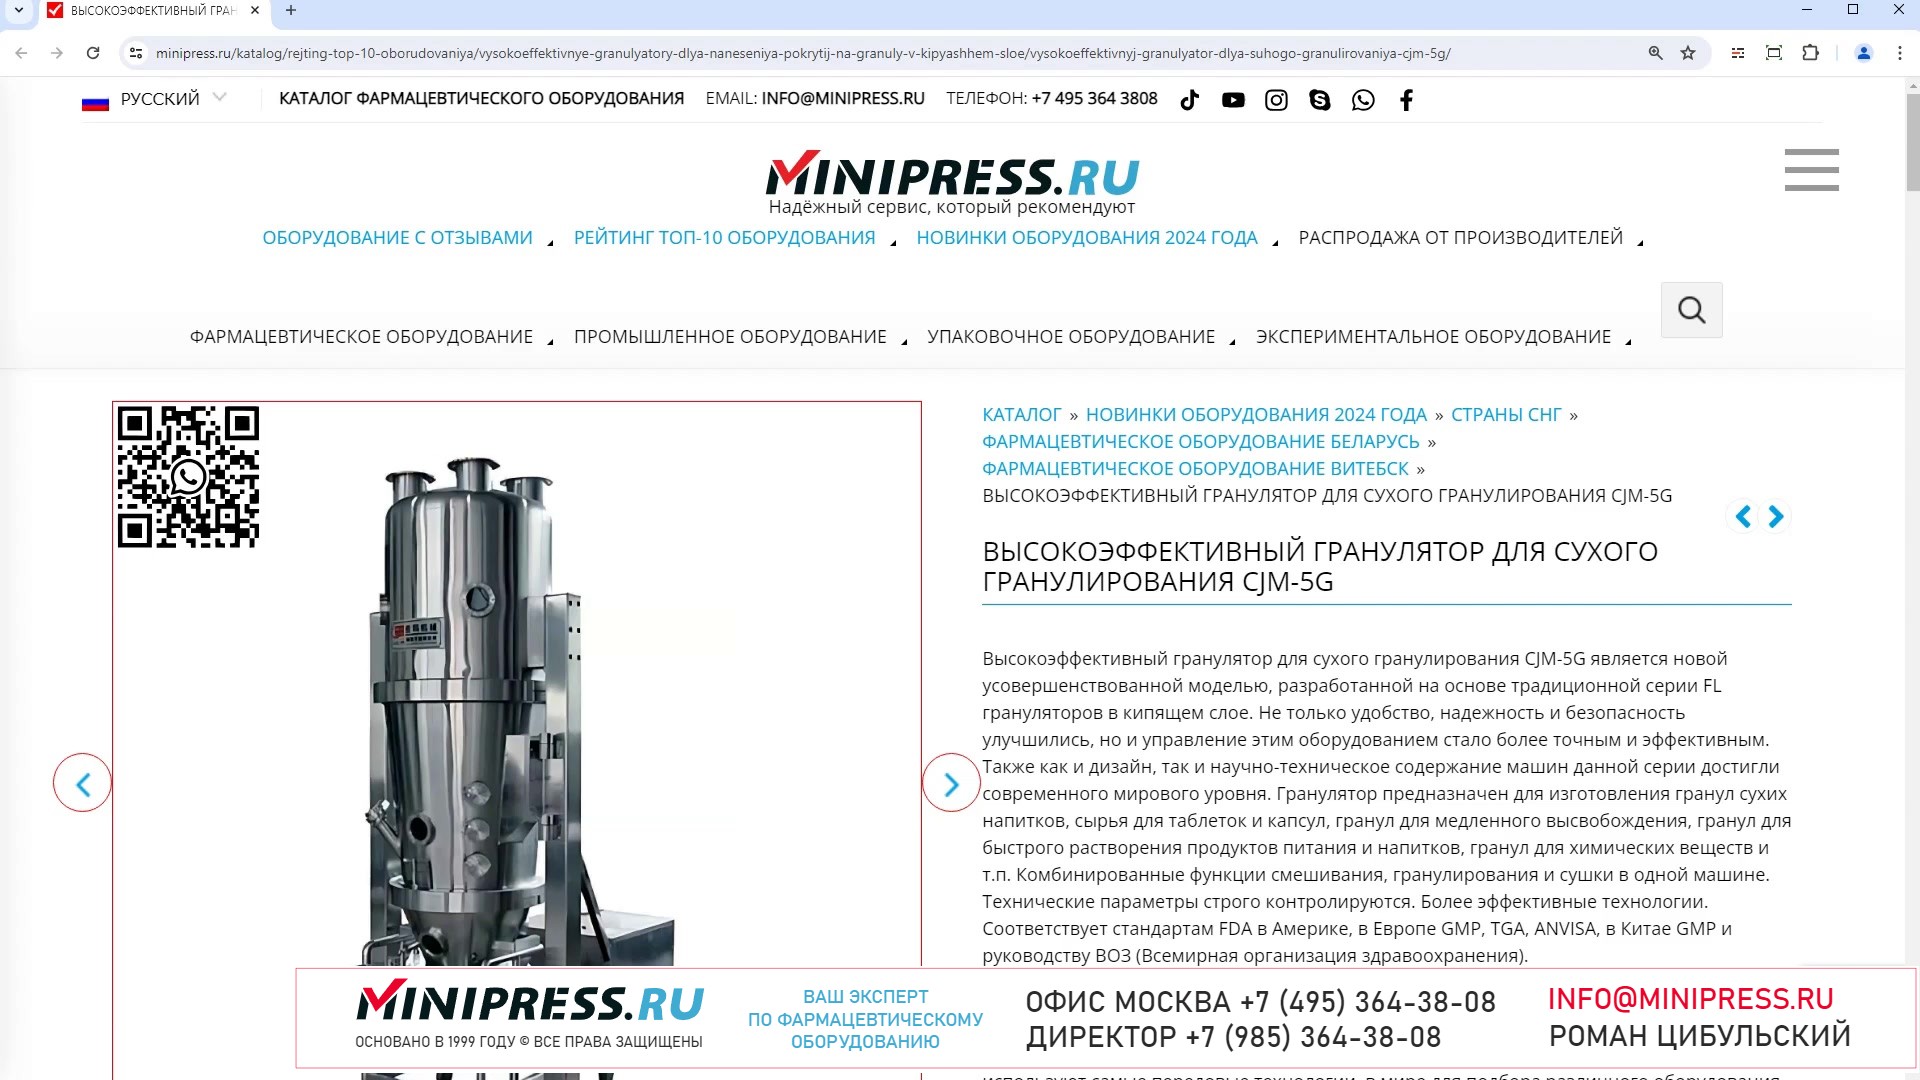 Minipress.ru Высокоэффективный гранулятор для сухого гранулирования CJM-5G